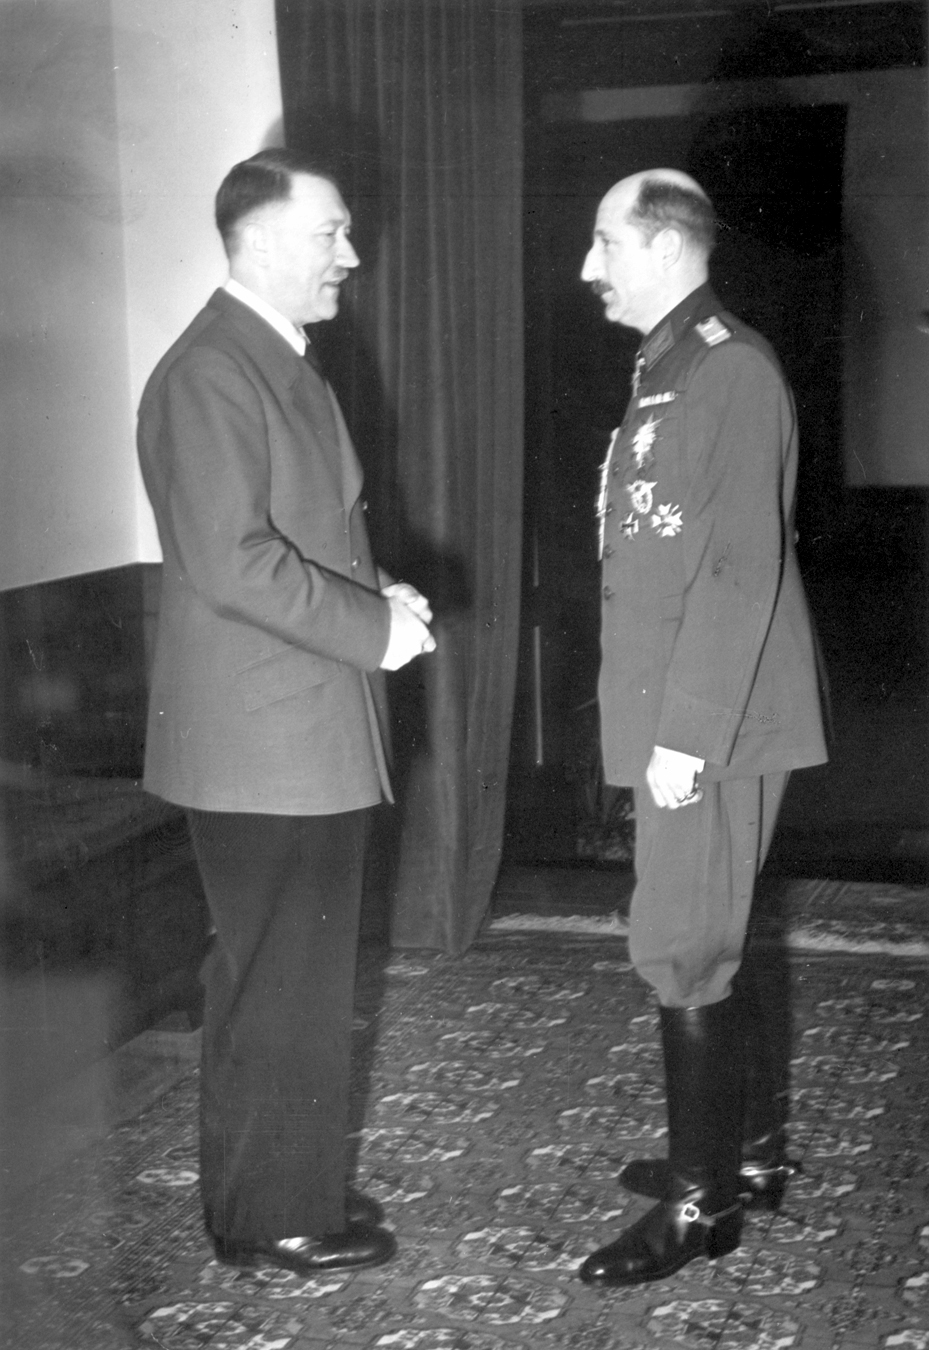 Adolf Hitler in conversation with Zar Boris III in the Berghof, from Eva Braun's albums